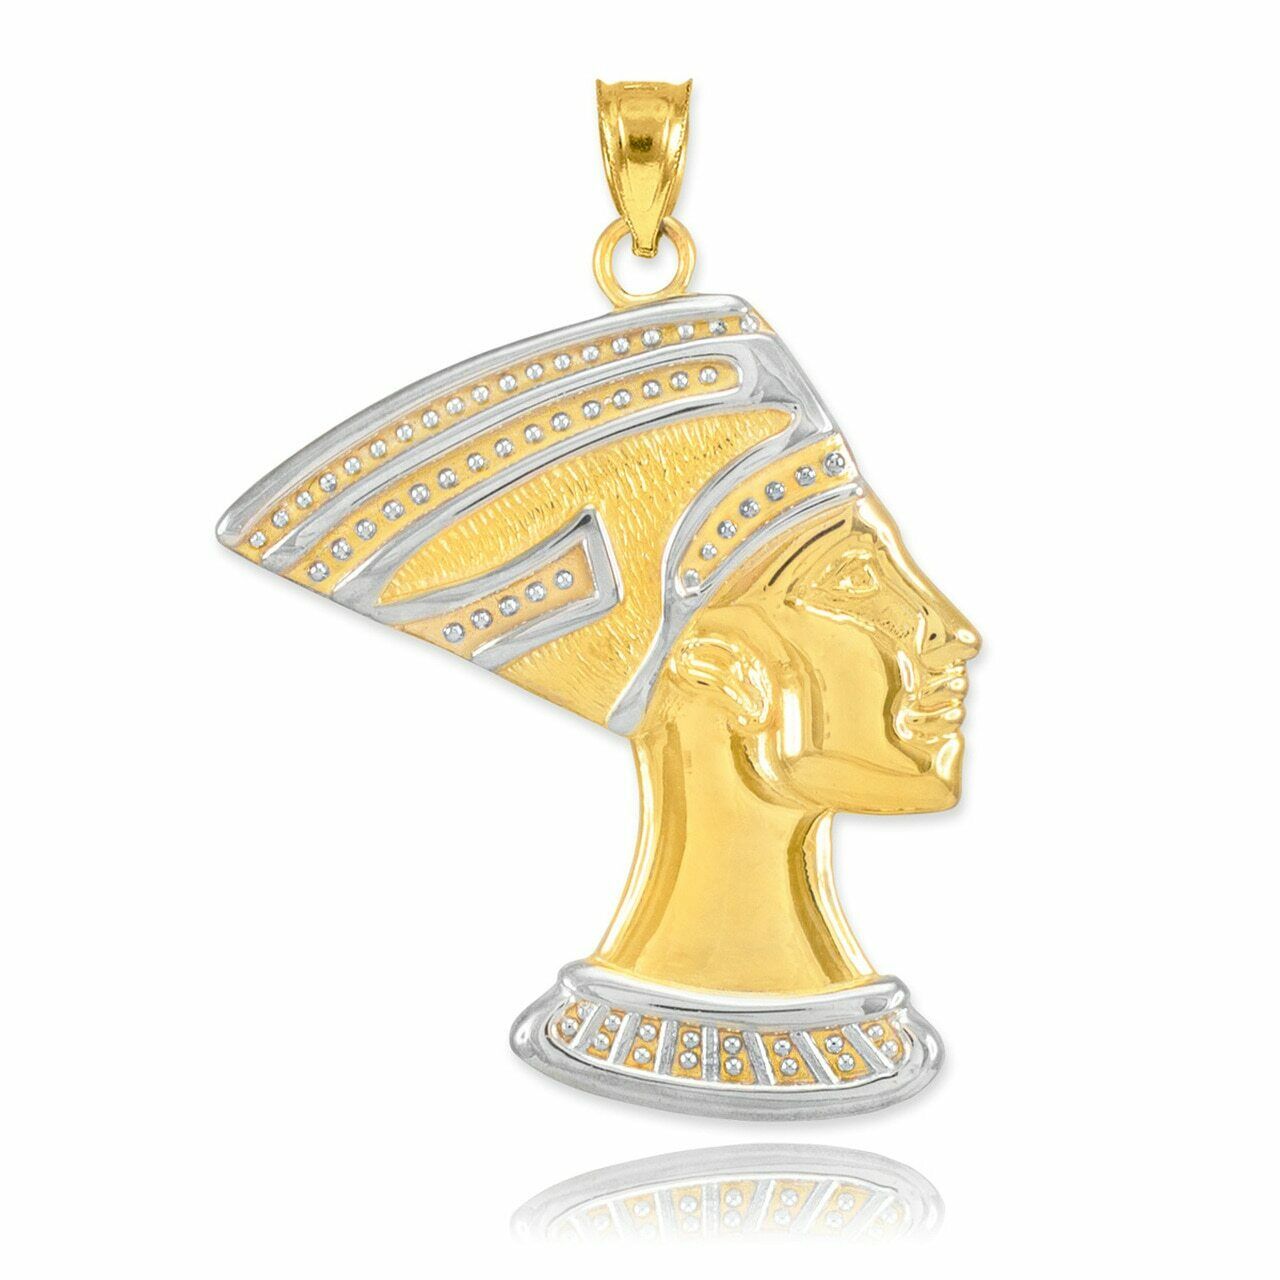 Two-Tone Gold Queen Nefertiti Pendant Pyramid Egypt Mummy Royalty Power Wisdom